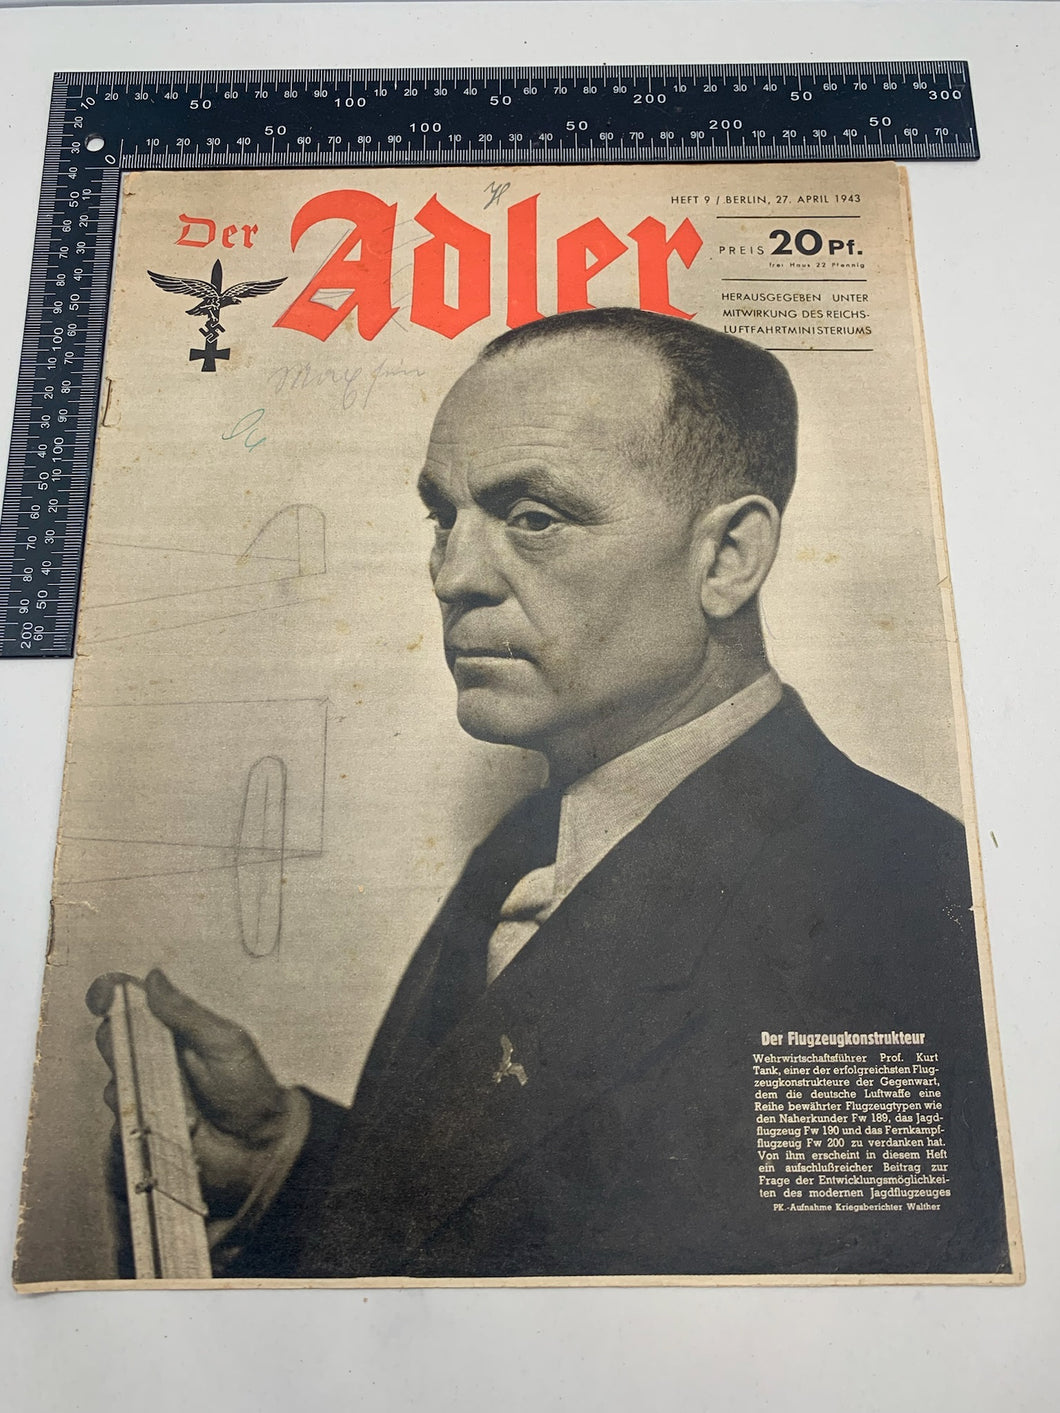 Der Adler Luftwaffe Magazine Original WW2 German - 27th April 1943